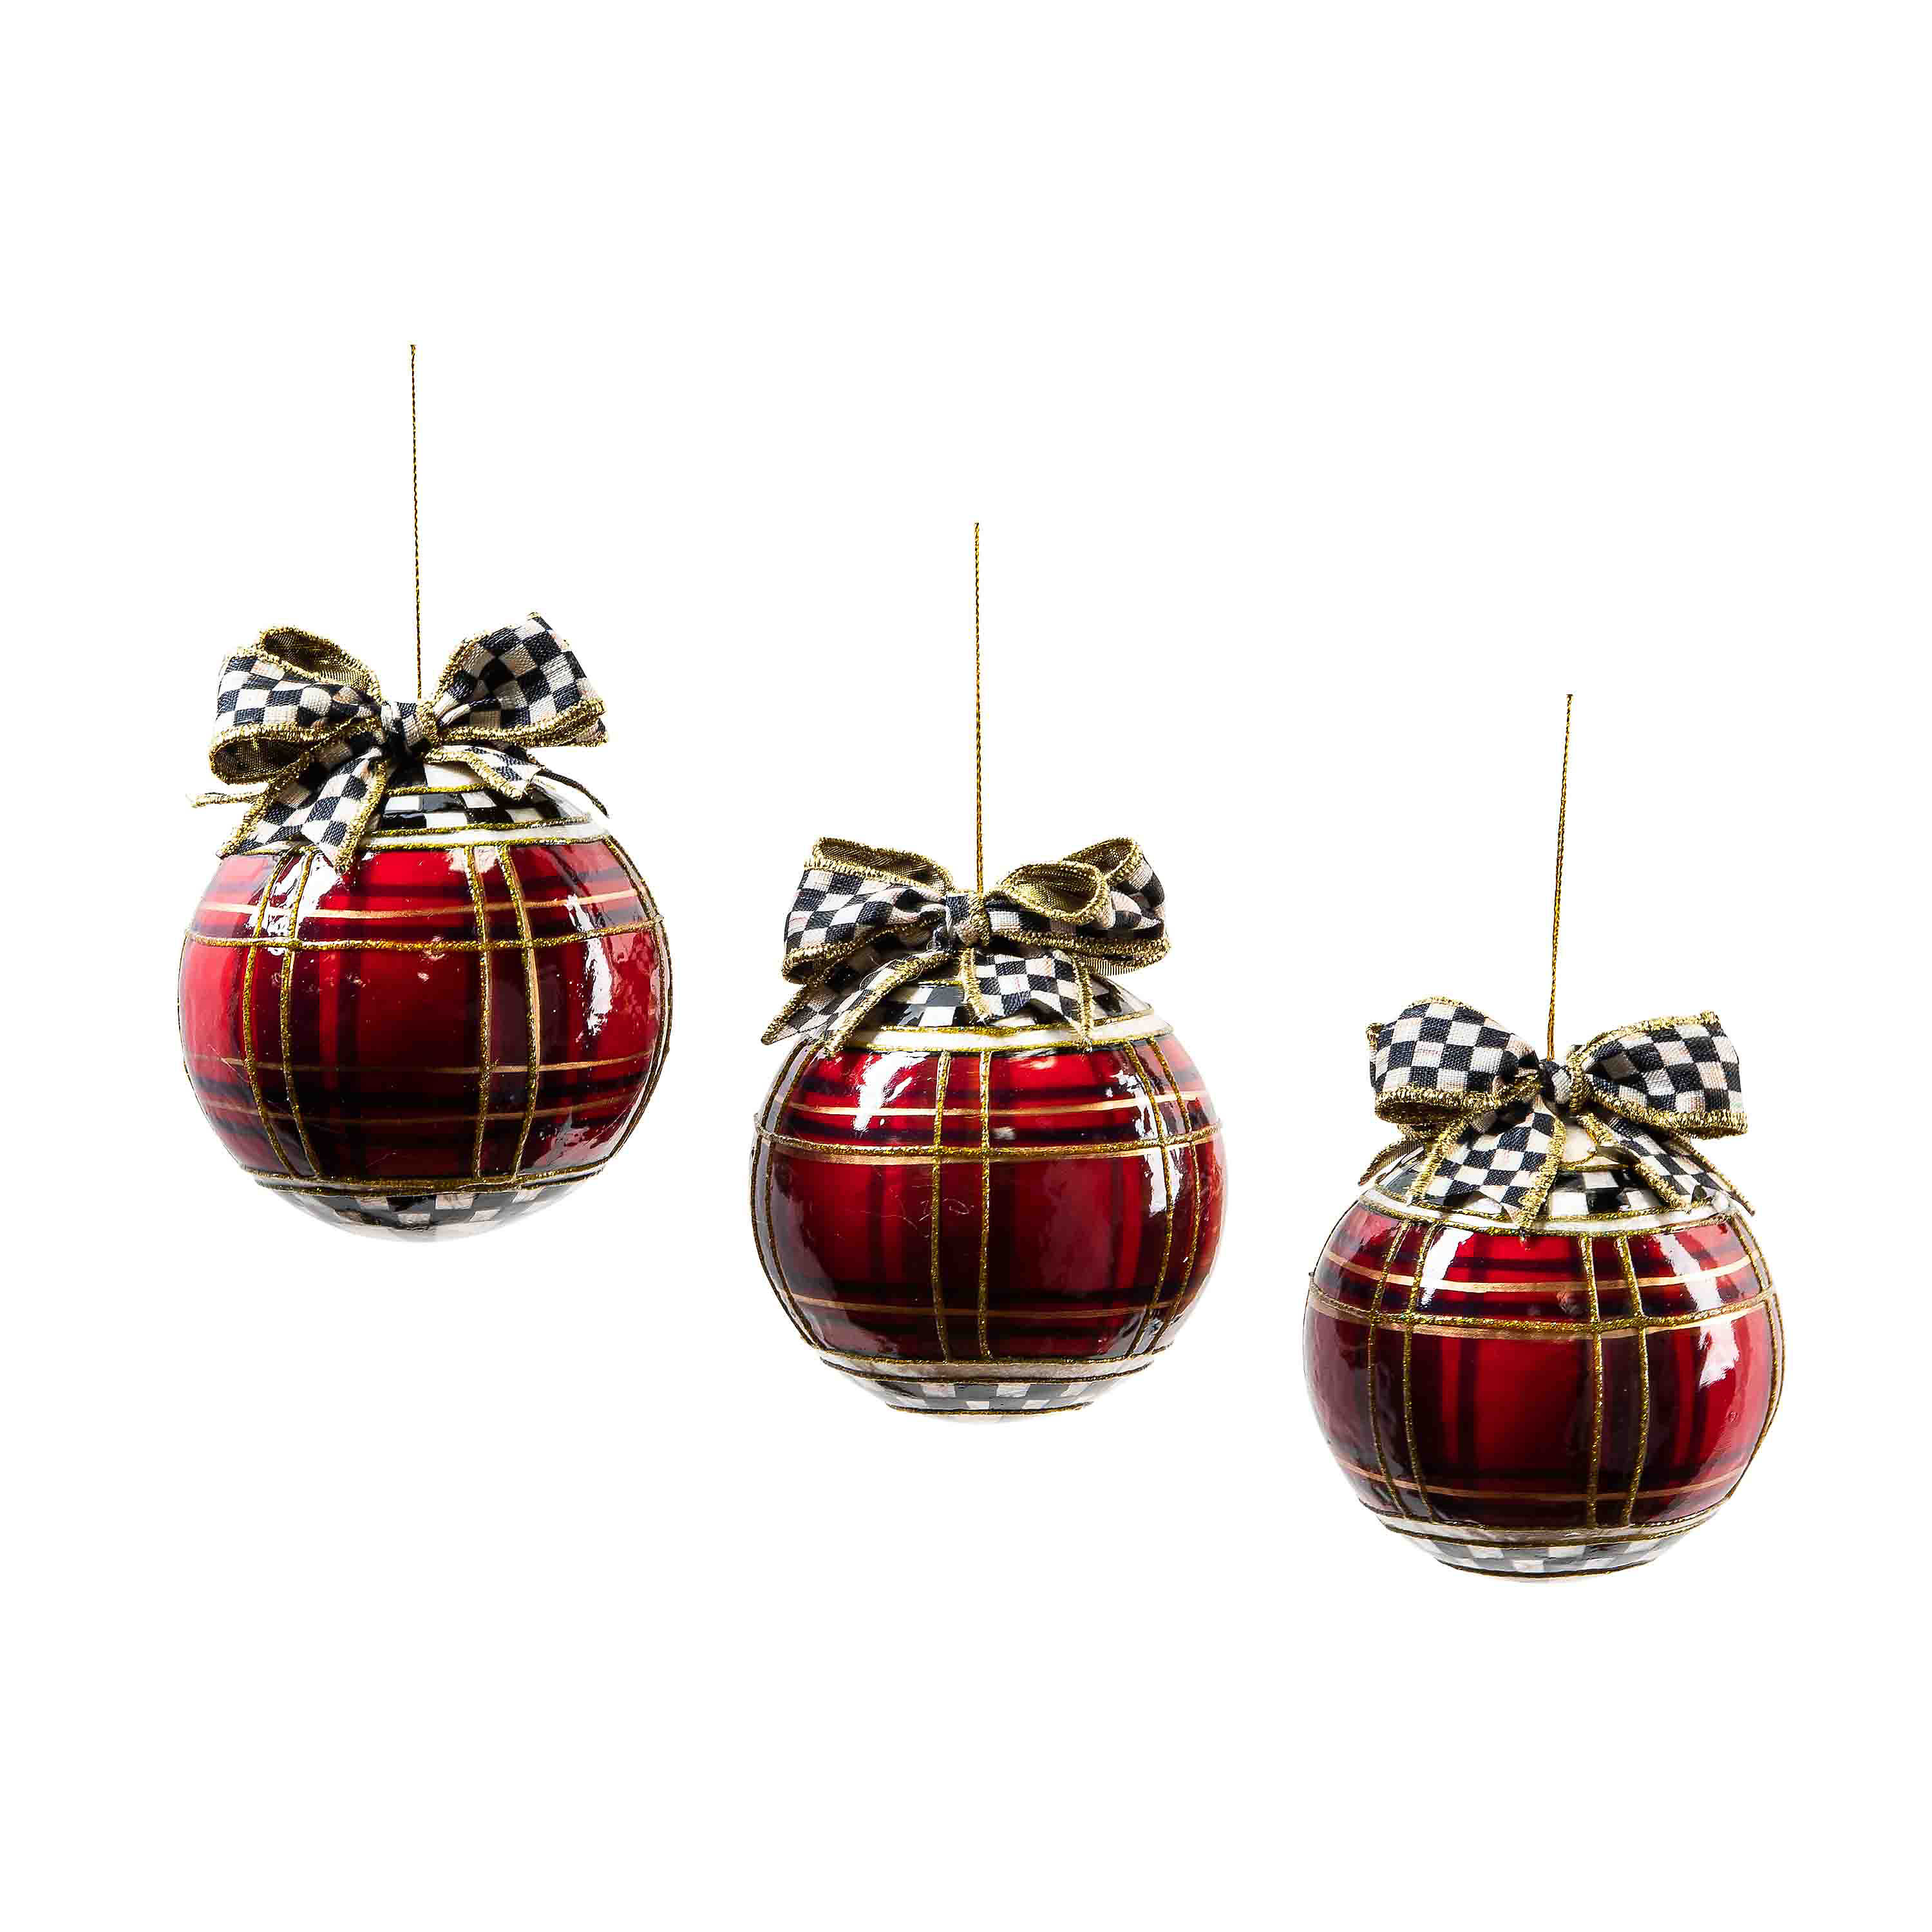 Tartastic Capiz Ball Ornaments, Set of 3 mackenzie-childs Panama 0